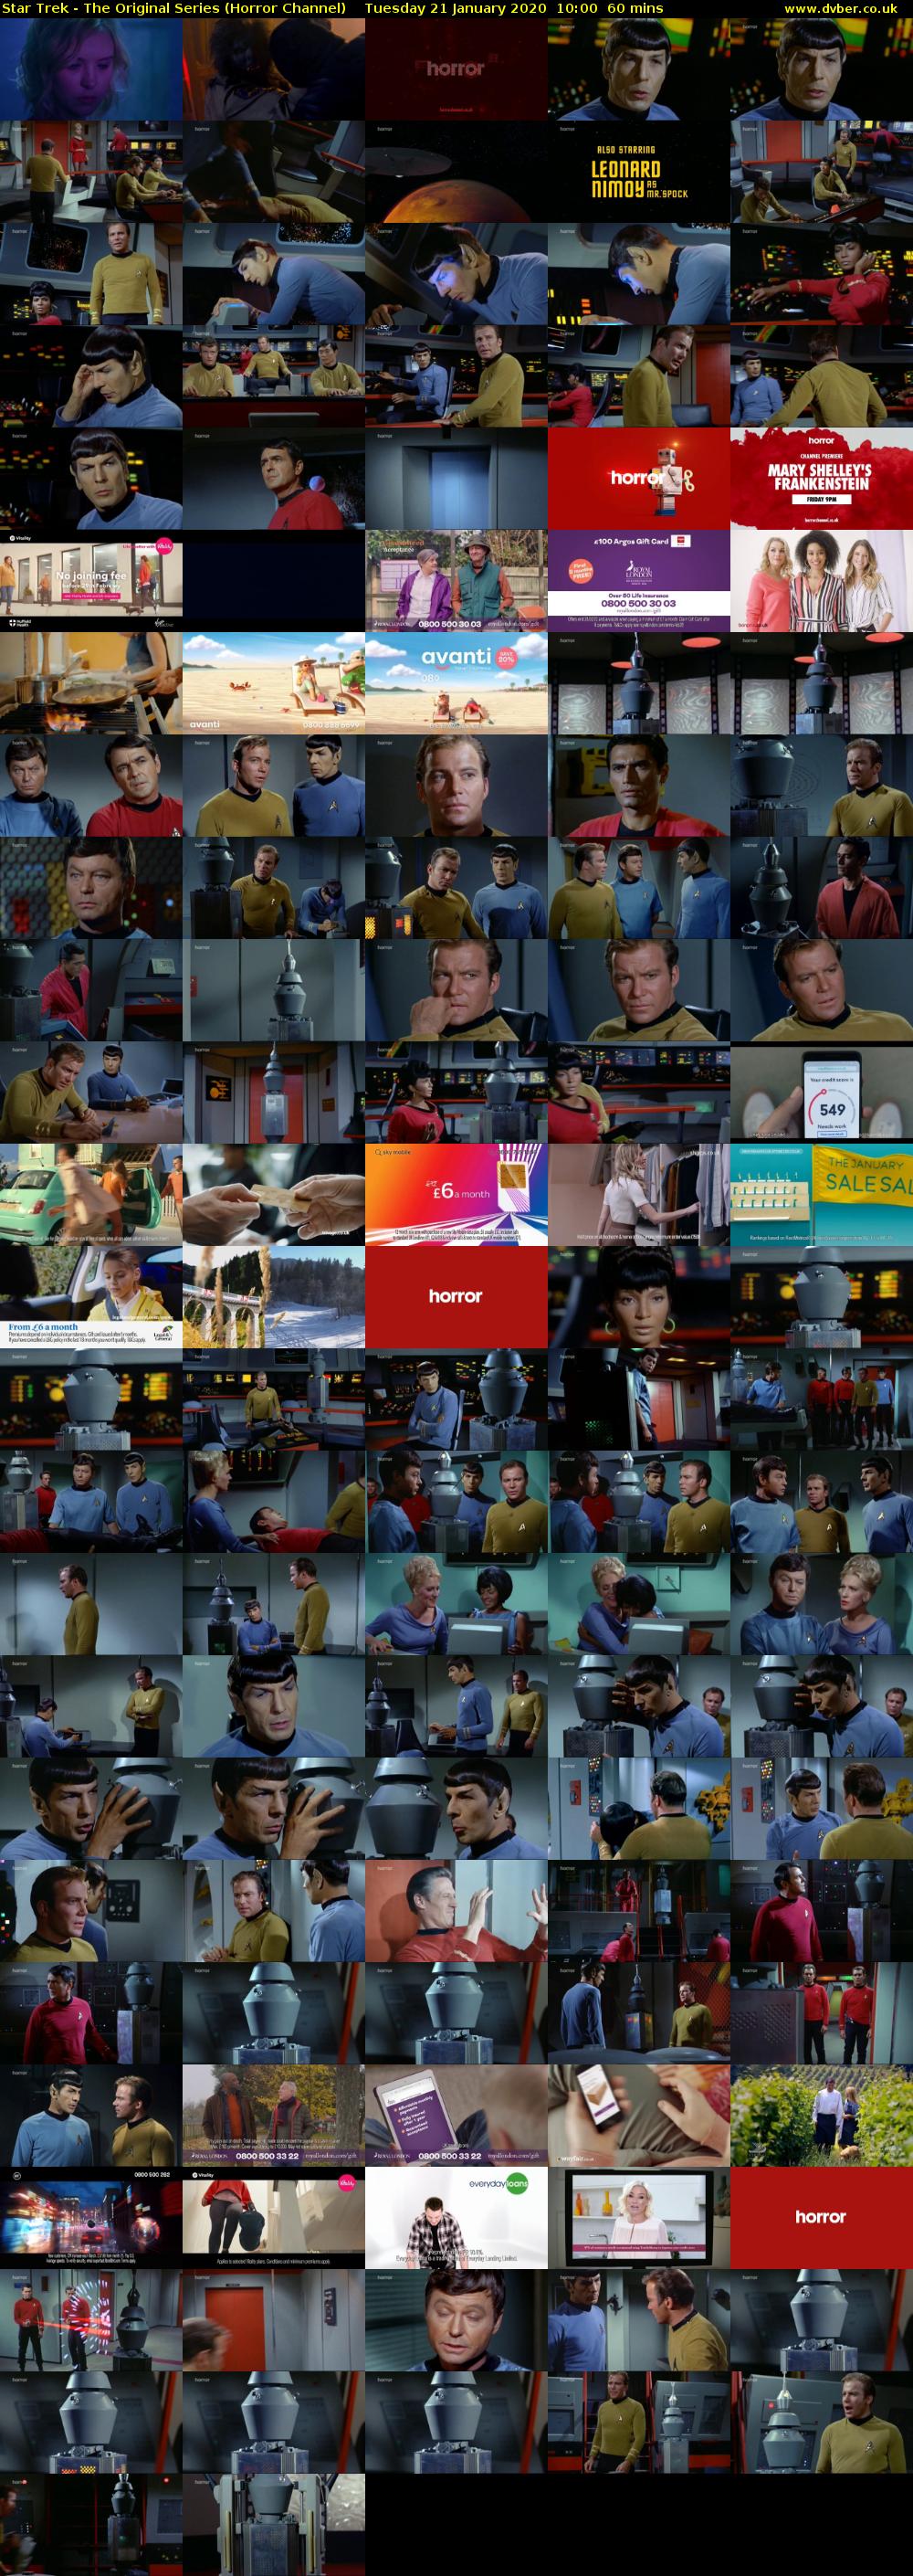 Star Trek - The Original Series (Horror Channel) Tuesday 21 January 2020 10:00 - 11:00